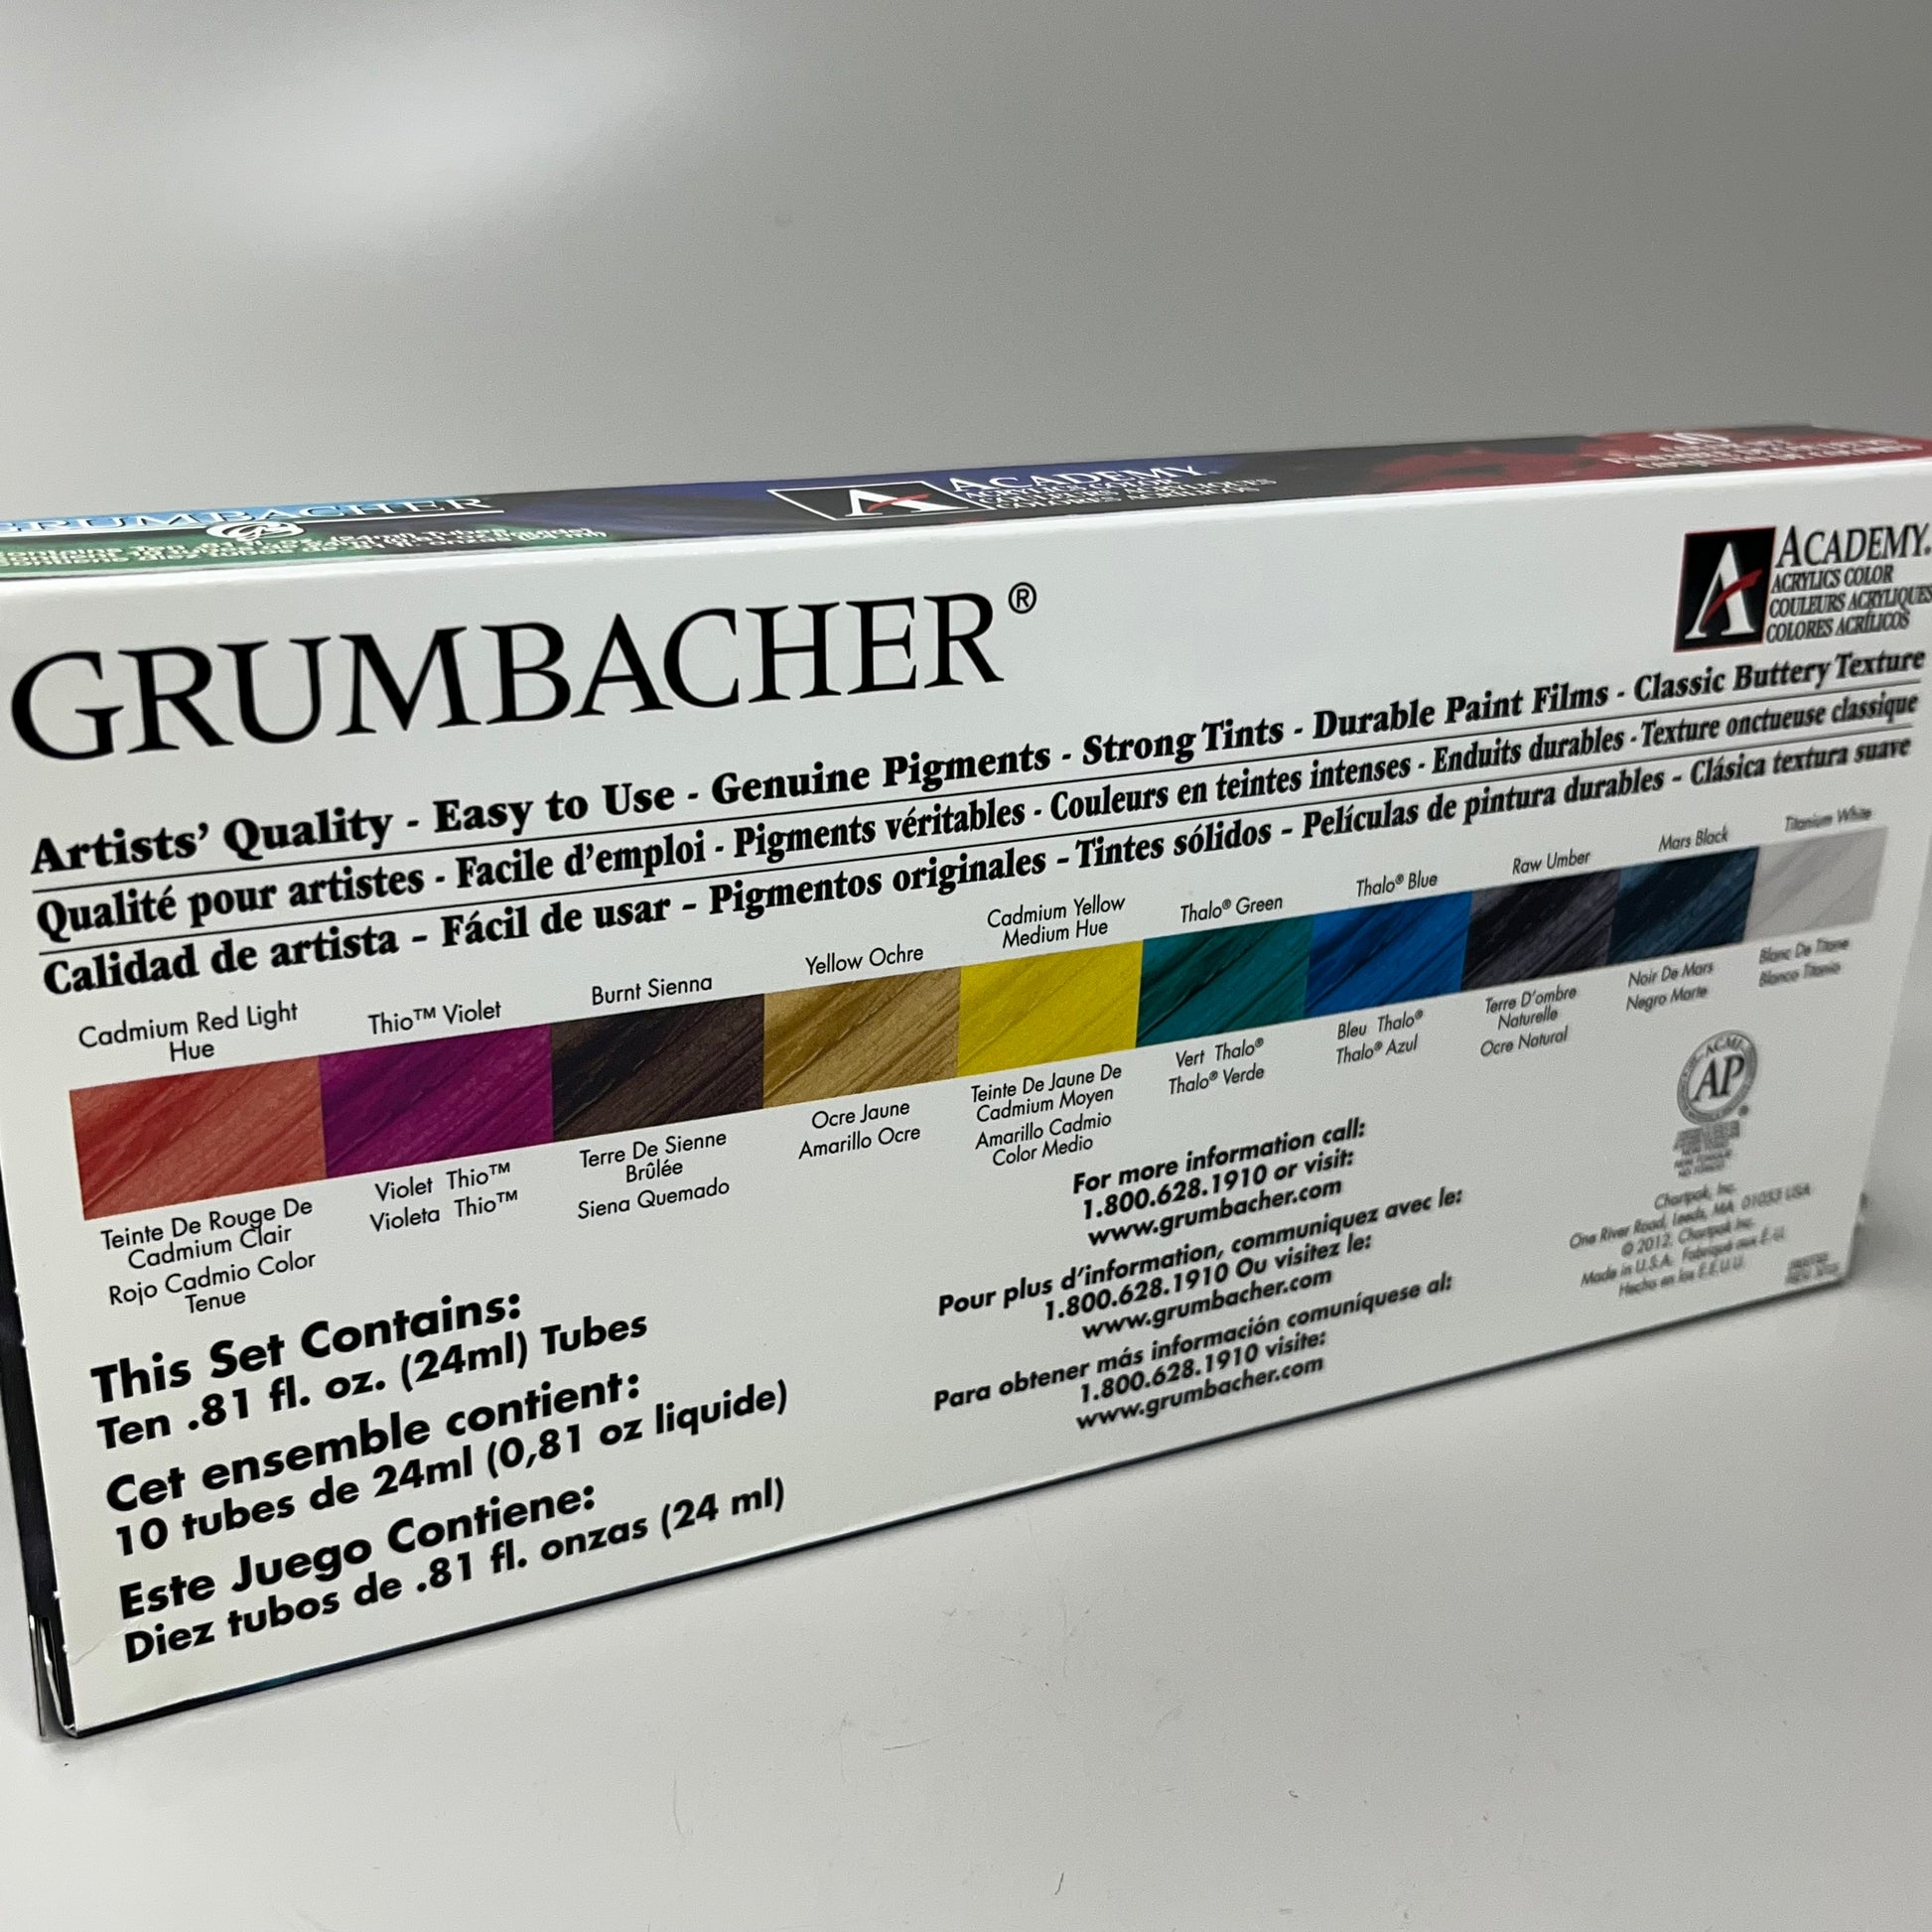 Grumbacher Academy Acrylic Paint 90ml Mars Black